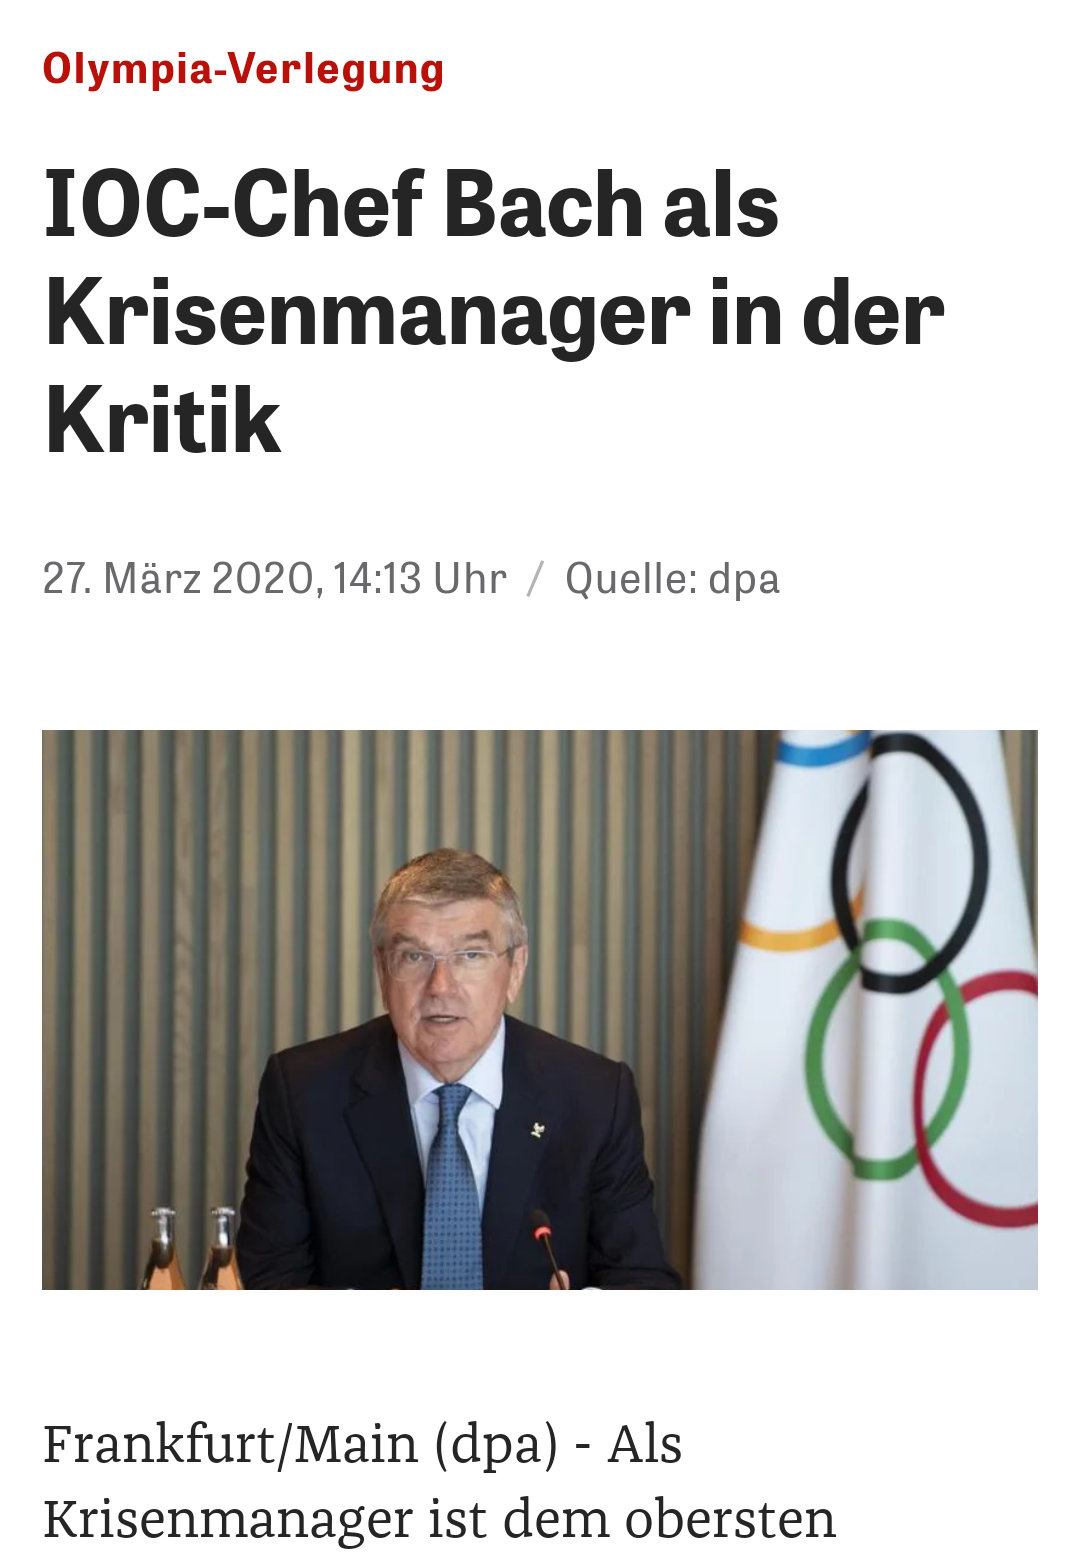 「IOCバッハ会長の危機管理能力に批判」との見出しで東京五輪延期について伝える3月27日のドイツ紙ツァイト電子版（撮影・鈴木智貴通信員）